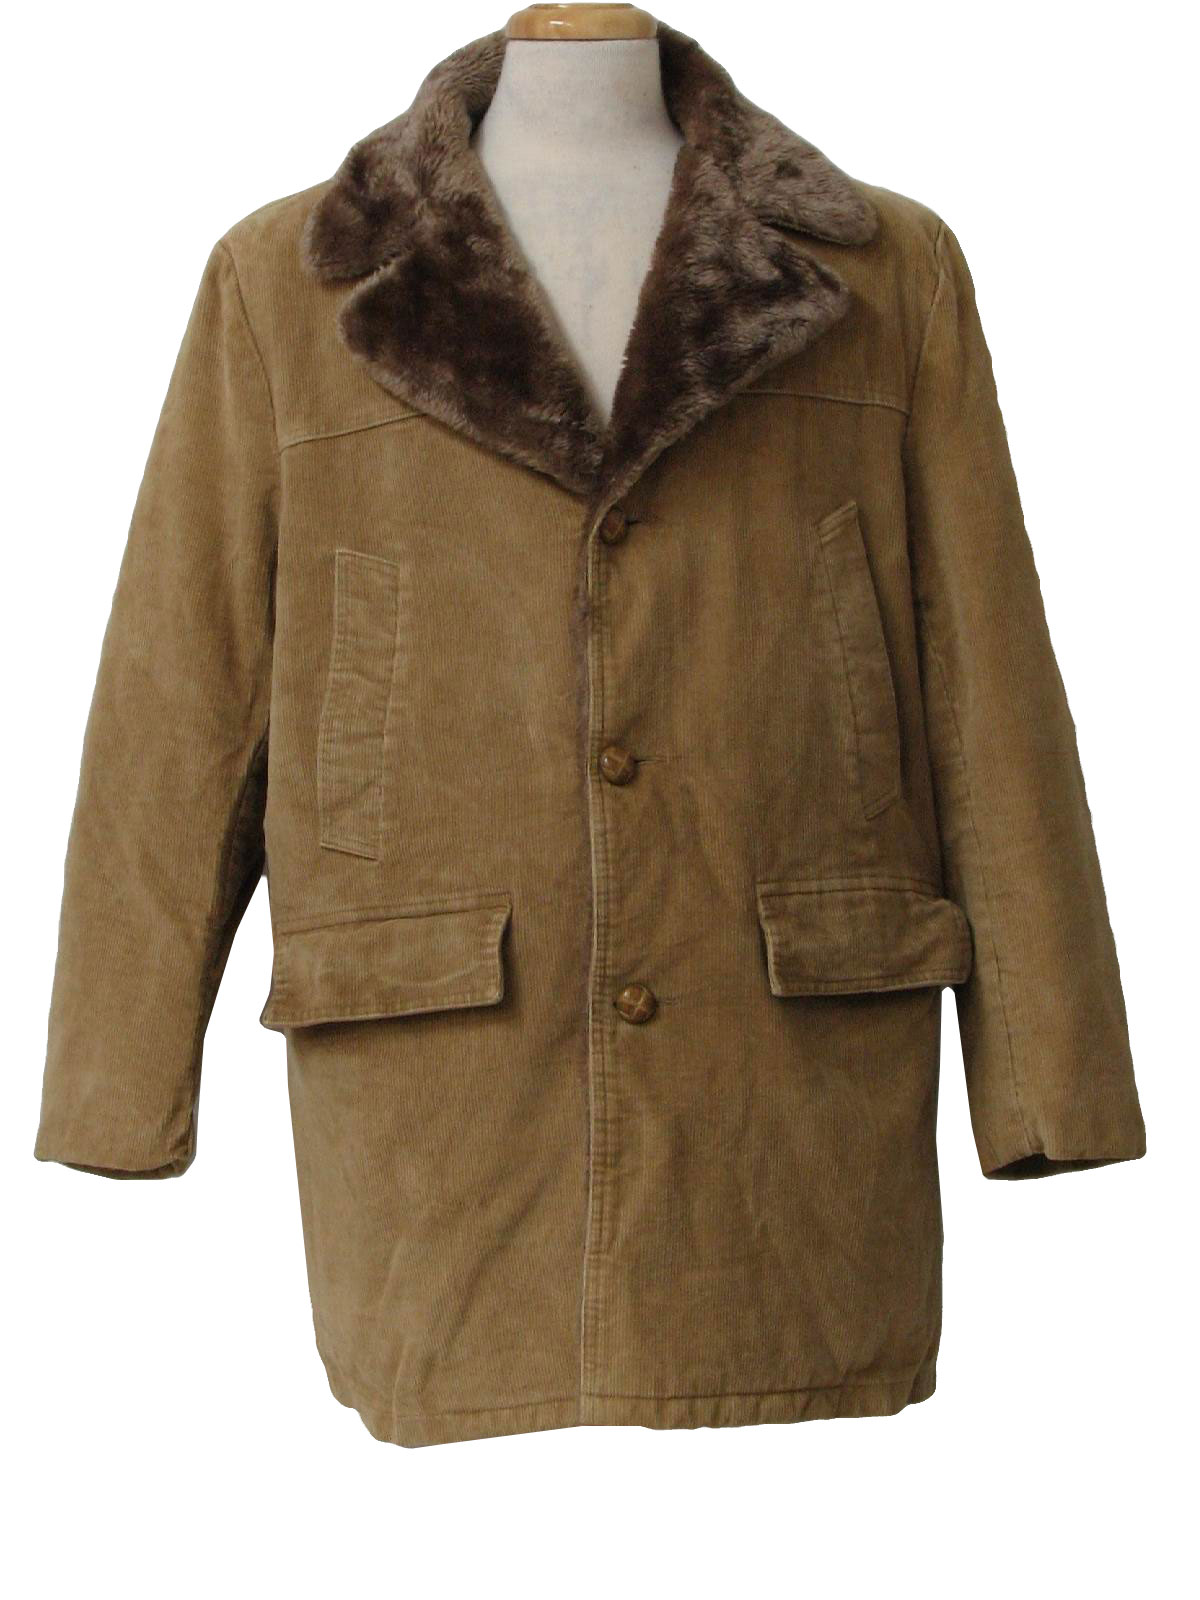 Retro 70's Jacket: 70s -Shanhouse- Mens tan corduroy car coat with ...